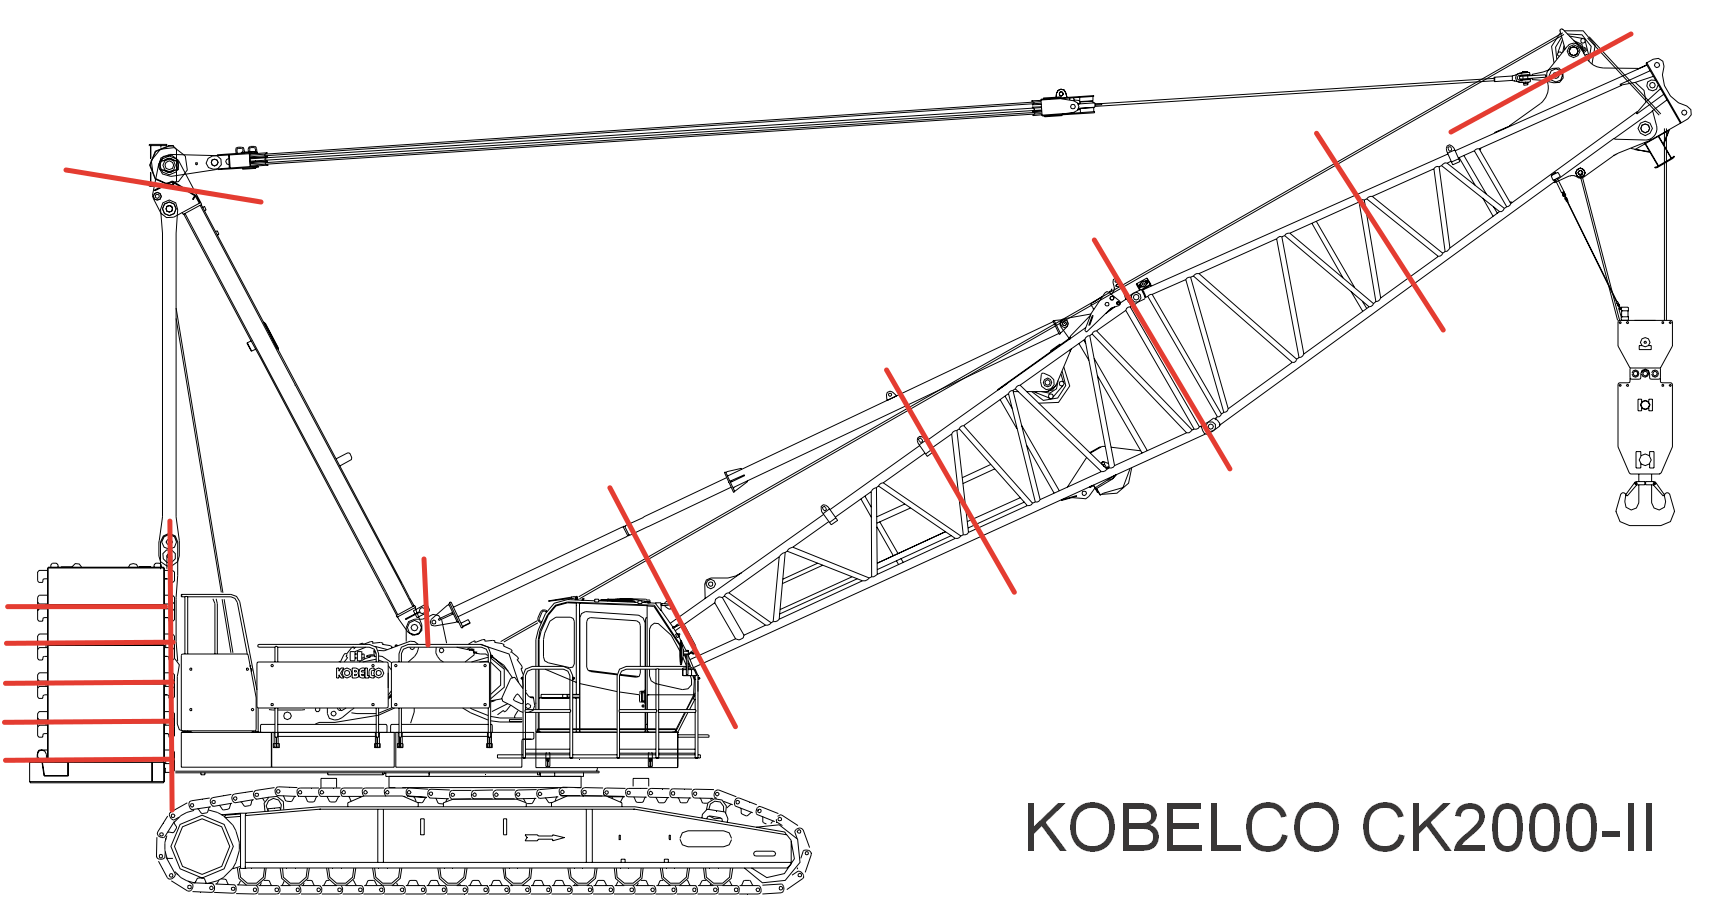 Heavy Equipment example: KOBELCO CK200-II crawler crane